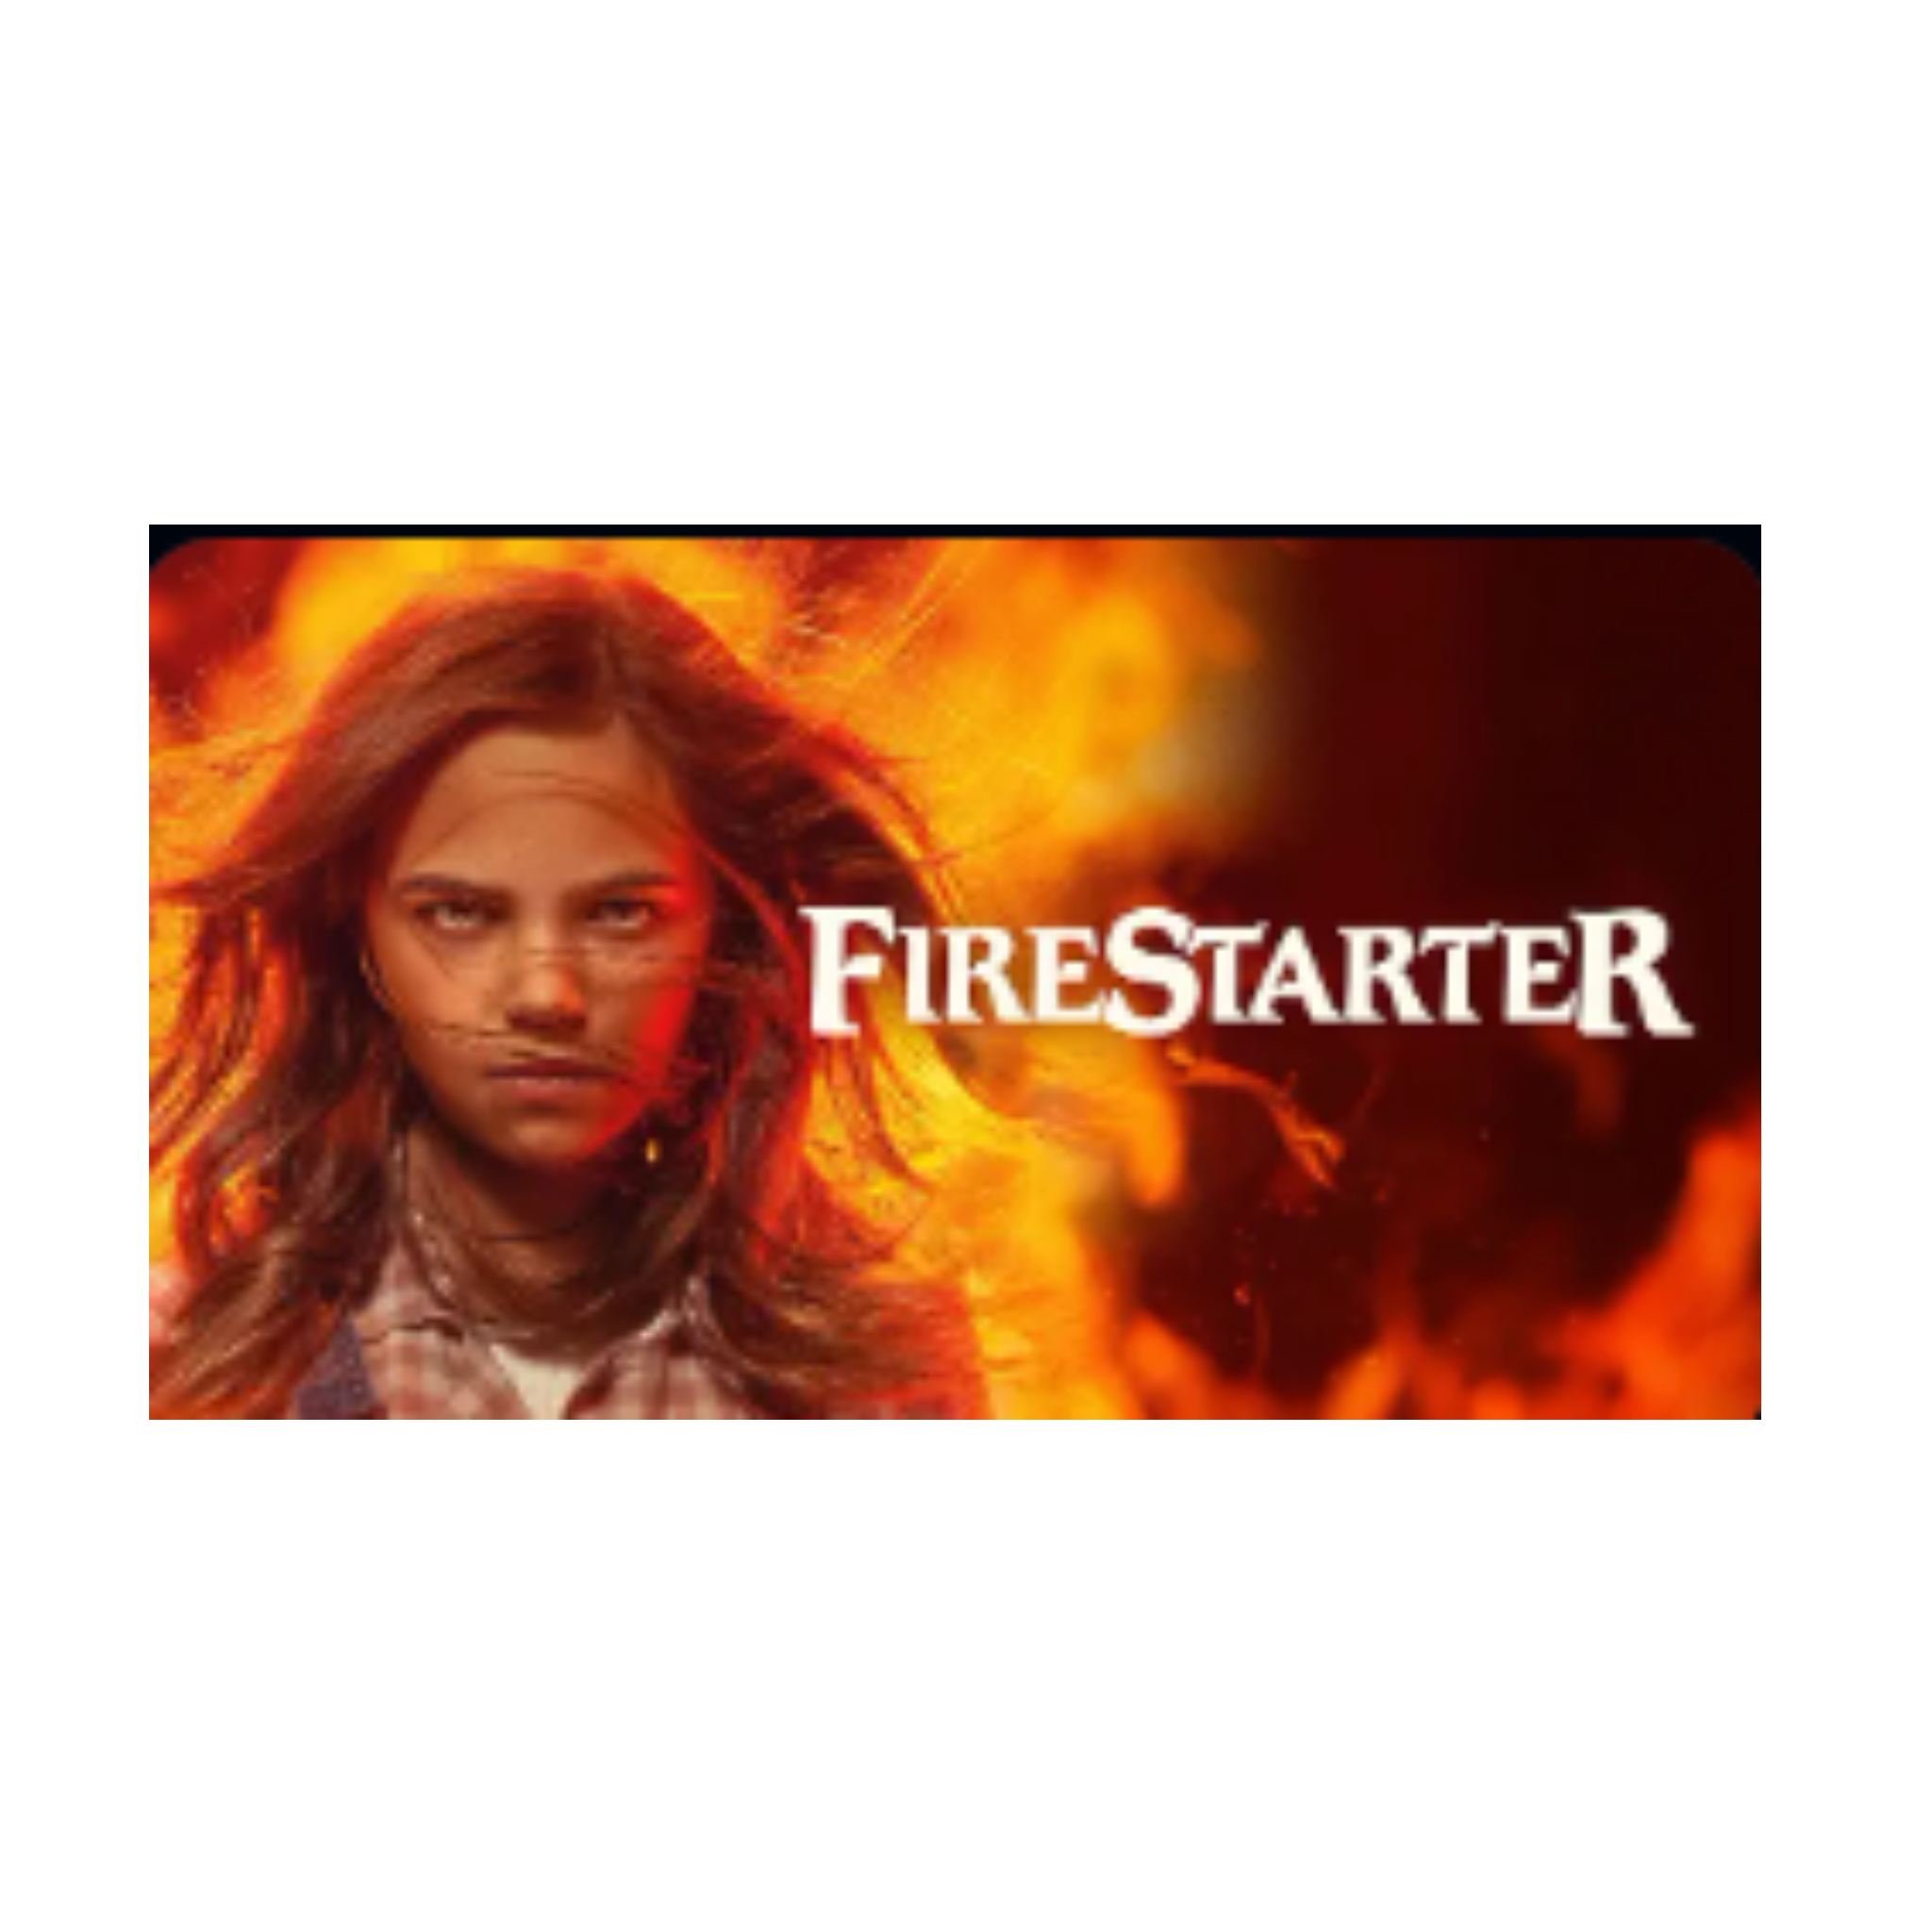 Firestarter (2022, 4K UHD Digital Film)